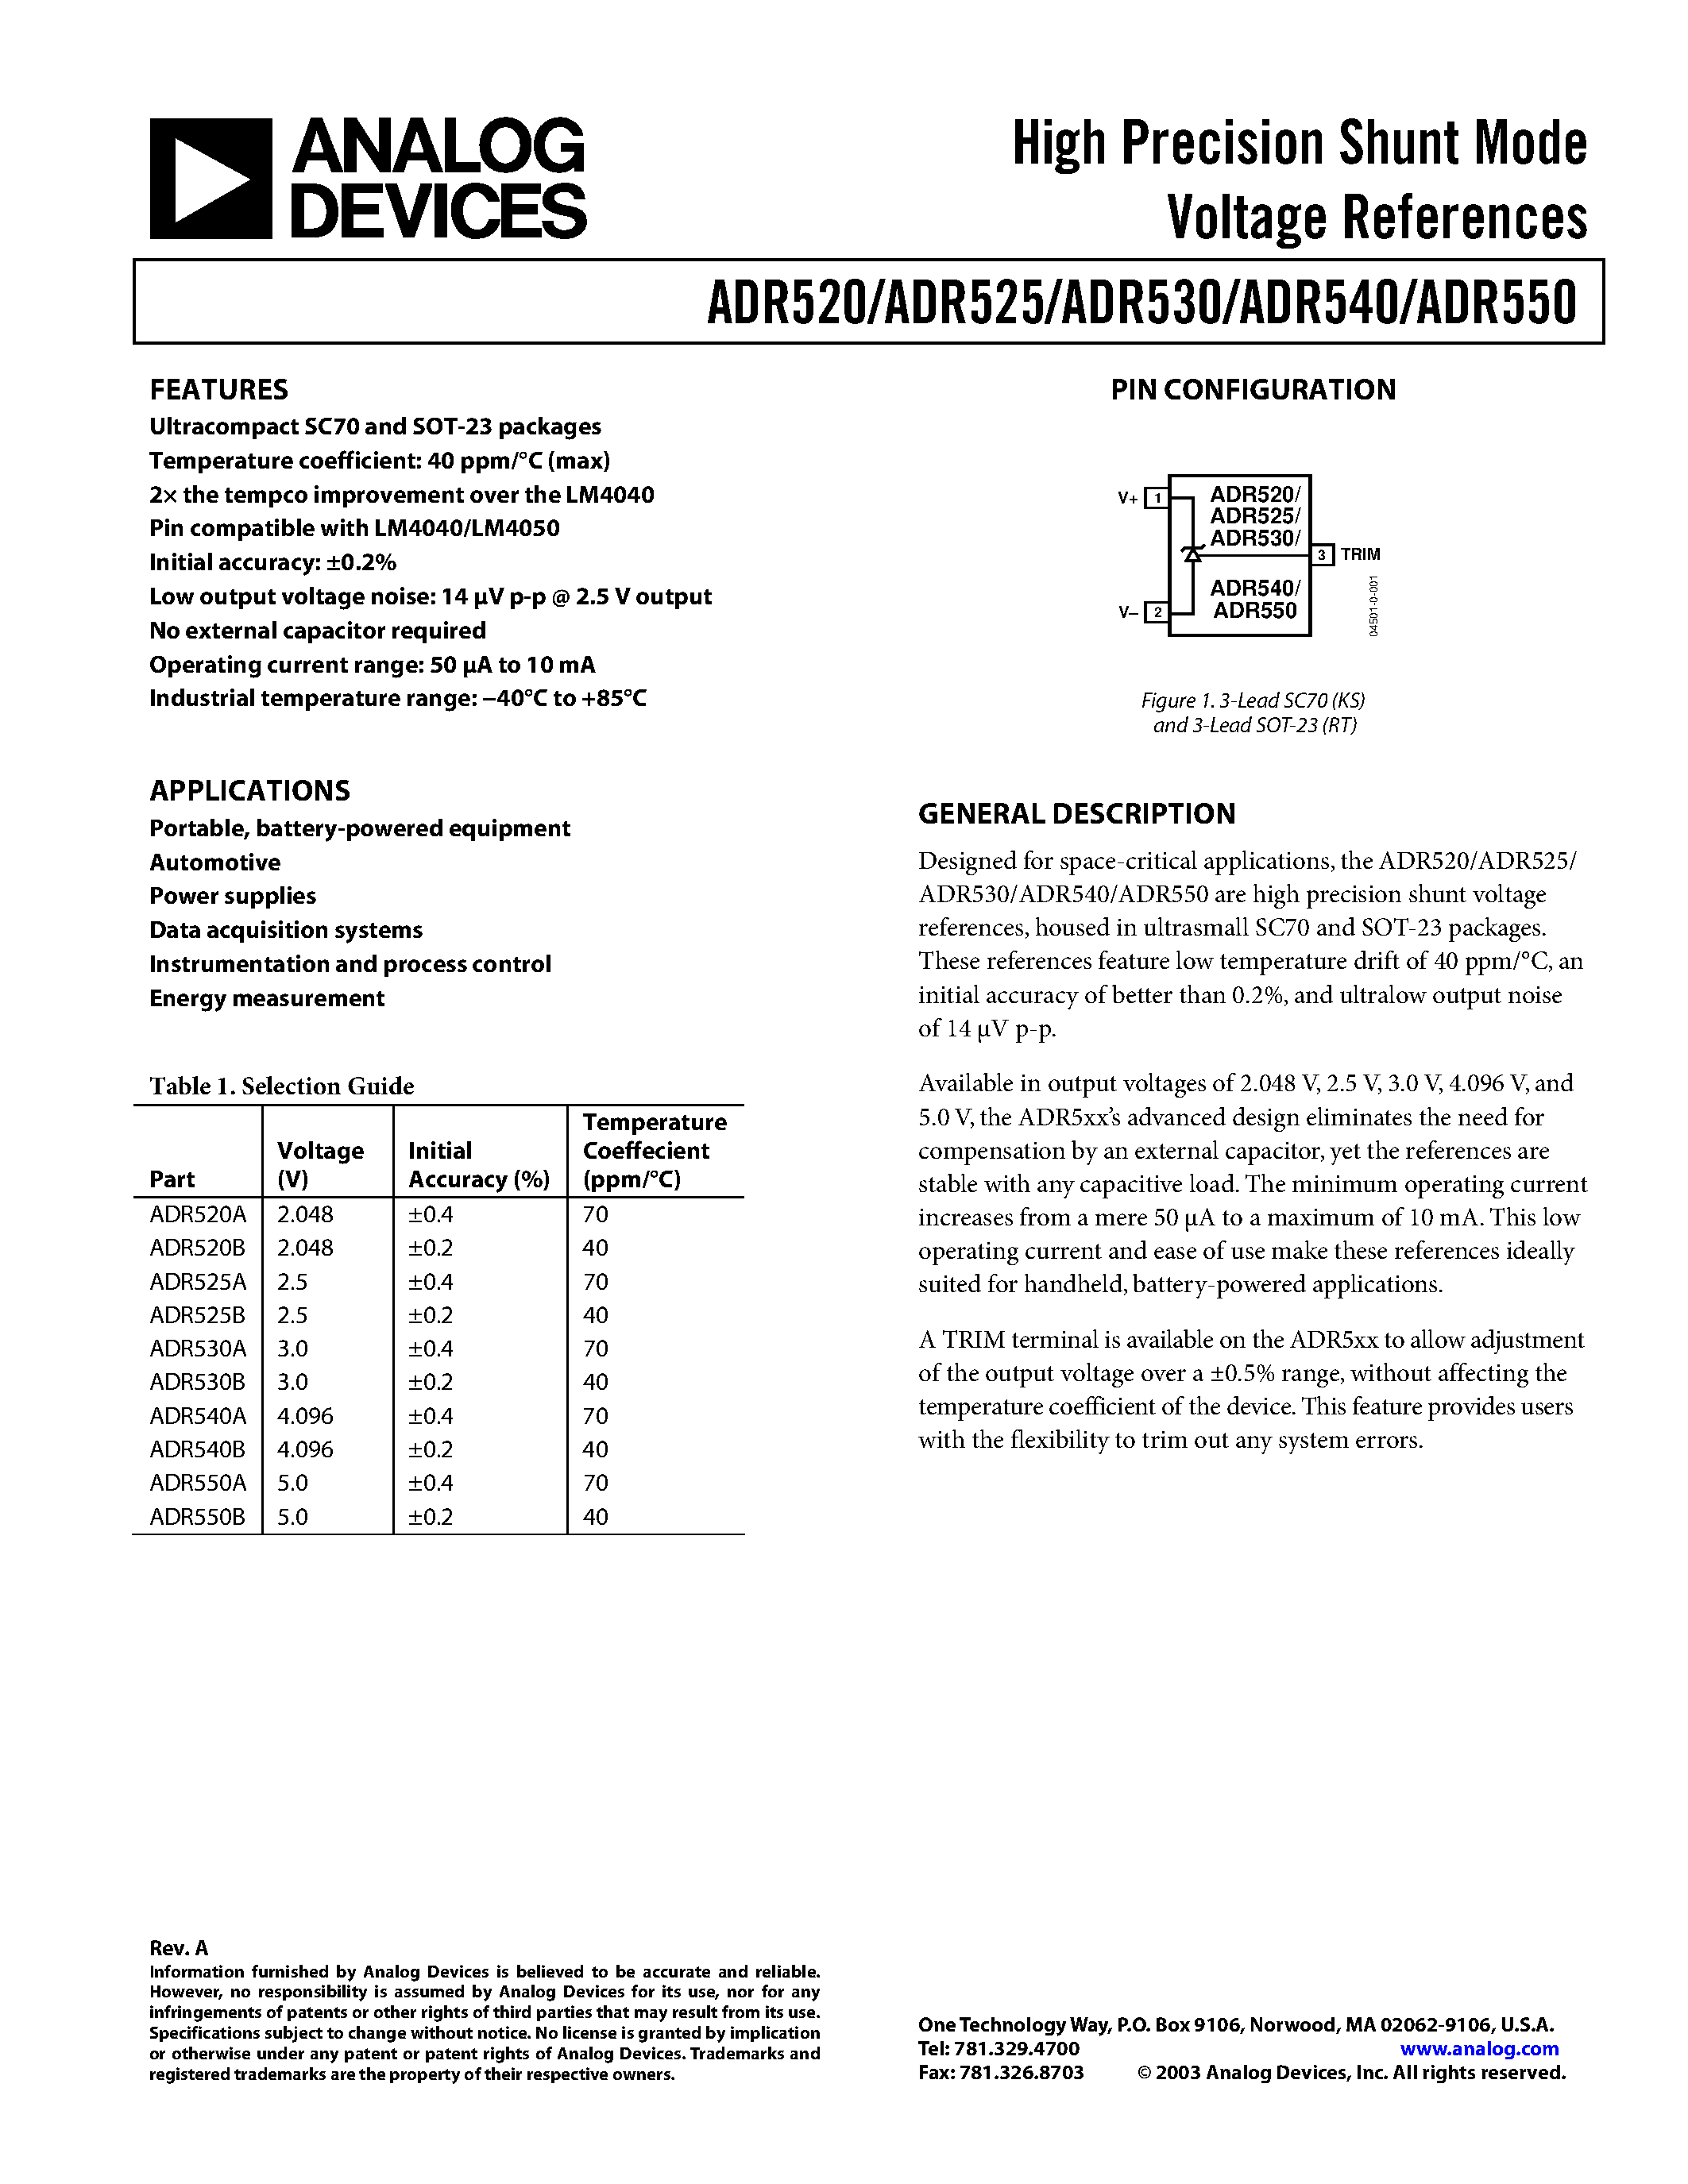 Даташит ADR550BKS-R2 - High Precision Shunt Mode Voltage References страница 1